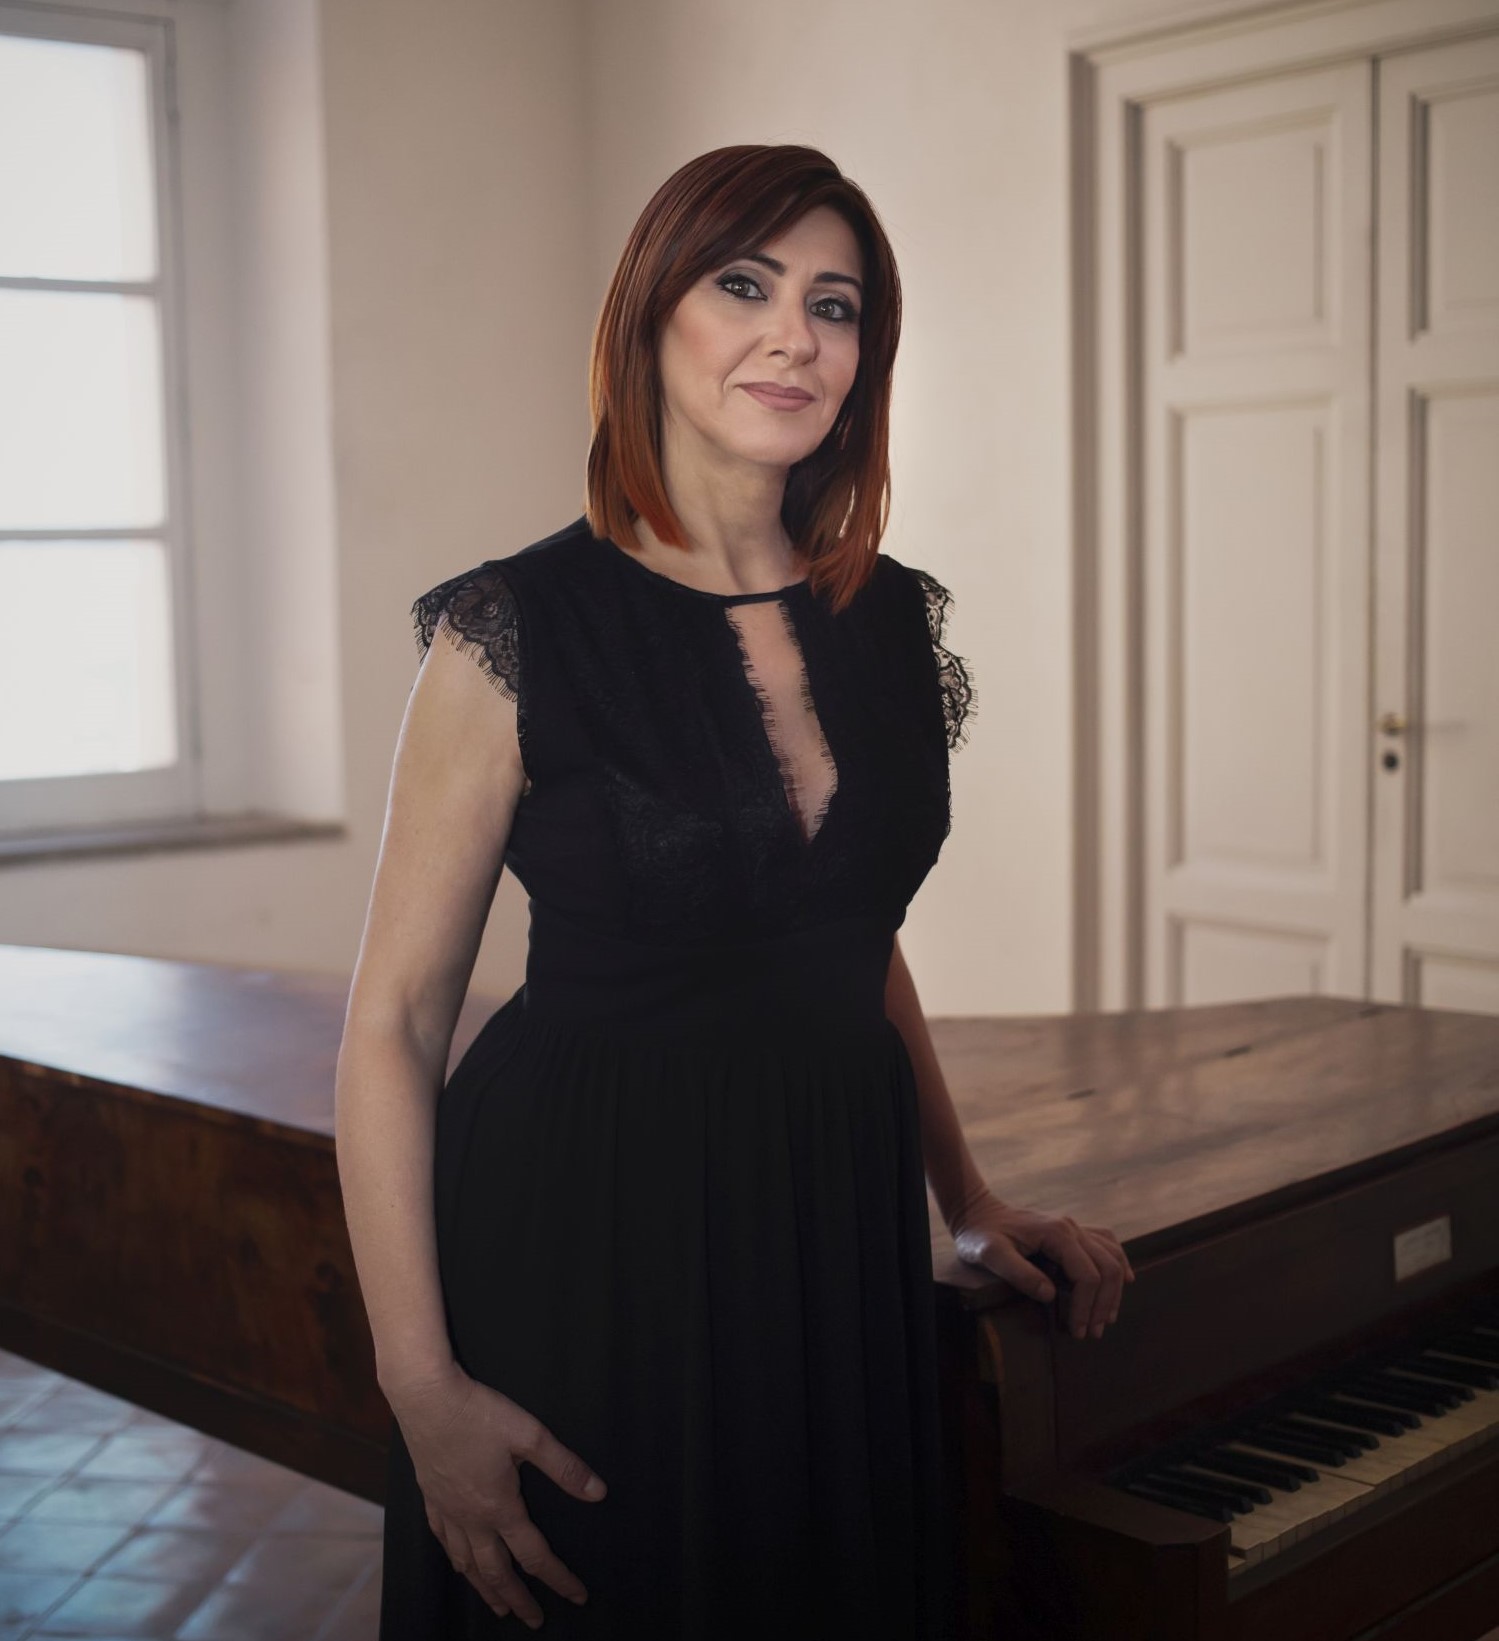 Festival Piano City Palermo, la pianista Giuseppina Torre tra i protagonisti